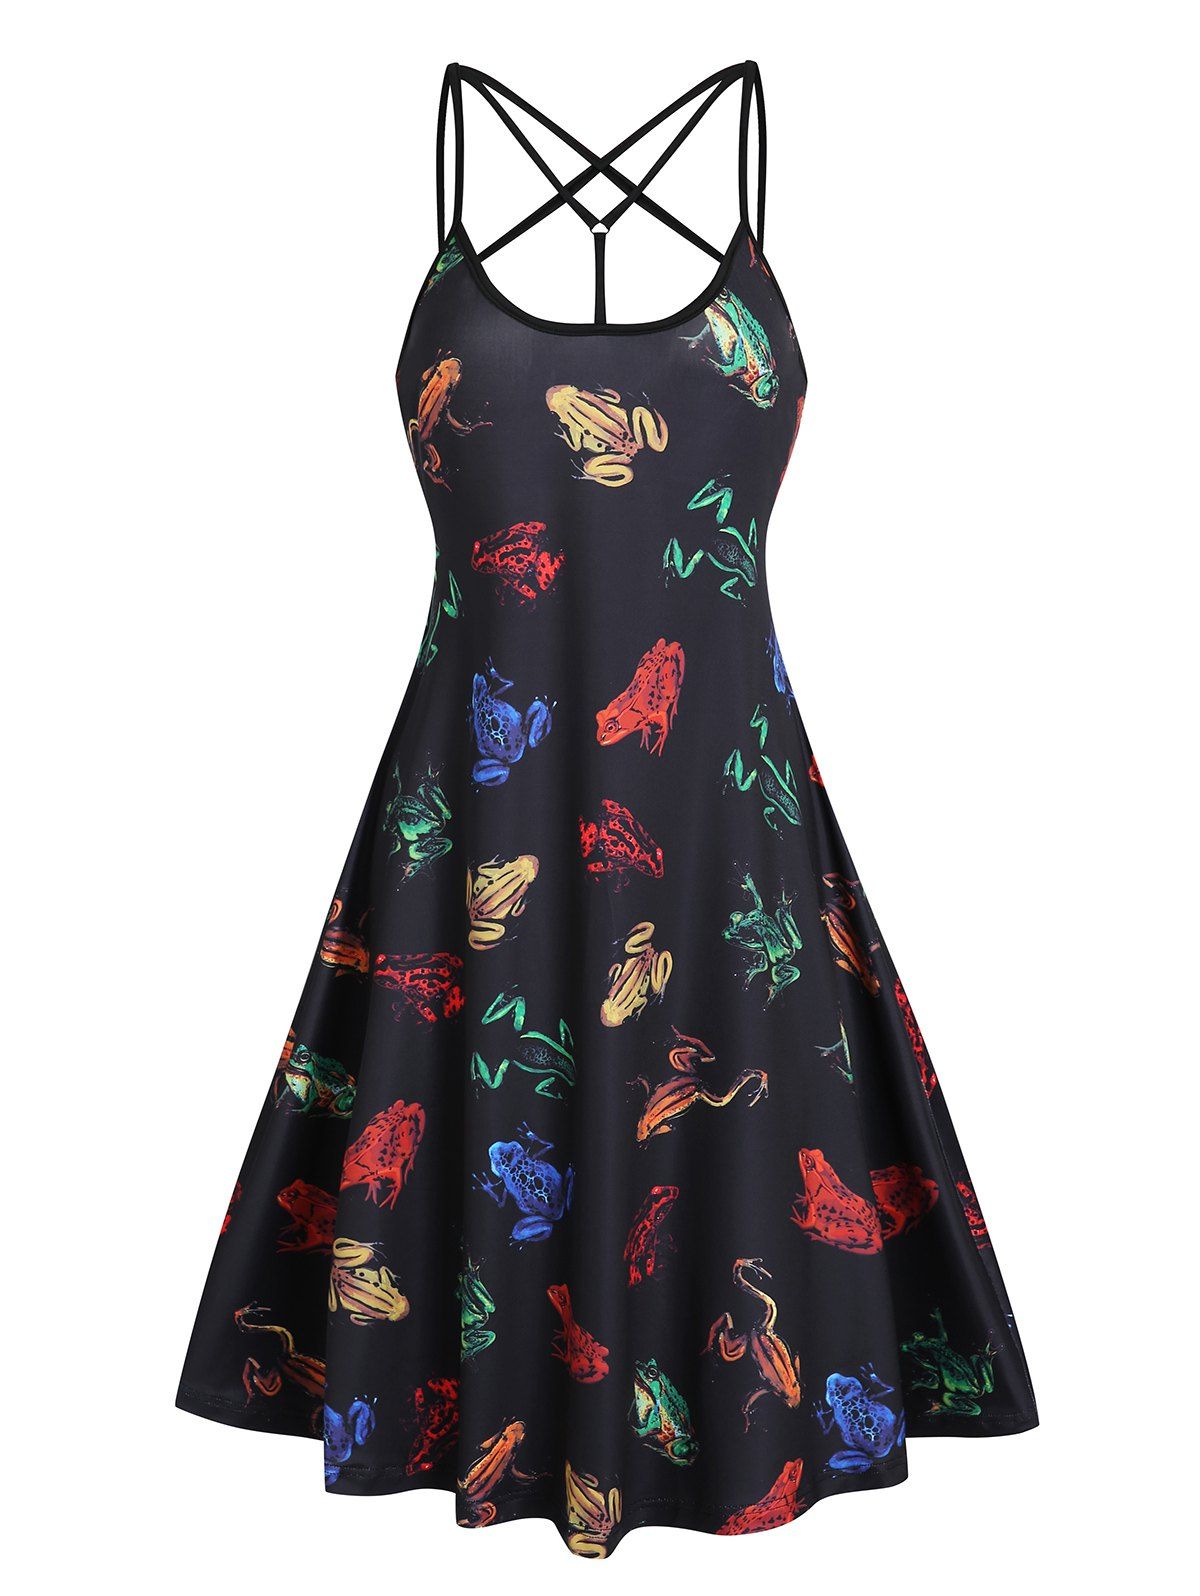 Allover 3D Frog Print Criss Cross Cami A Line Dress - BLACK XXL